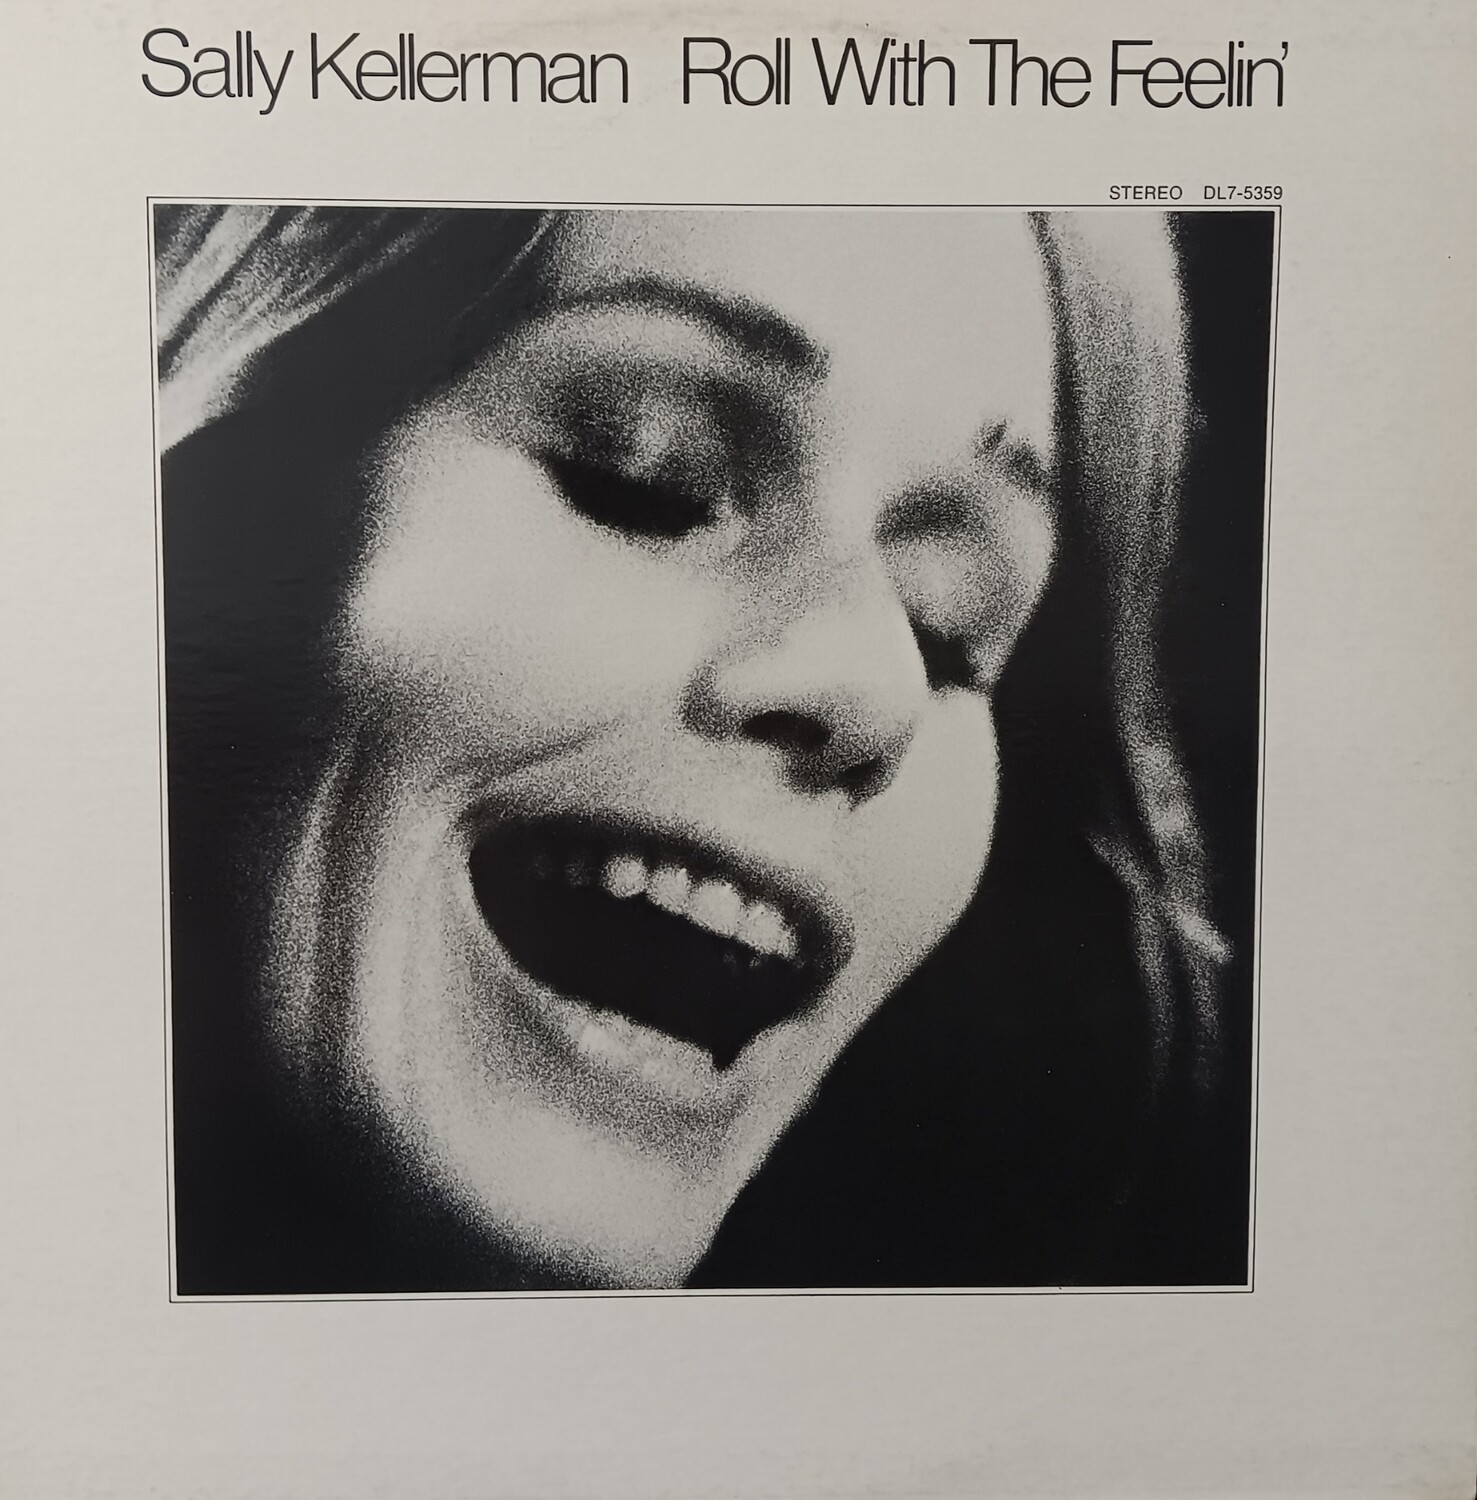 SALLY KELLERMAN - Roll with the feelin